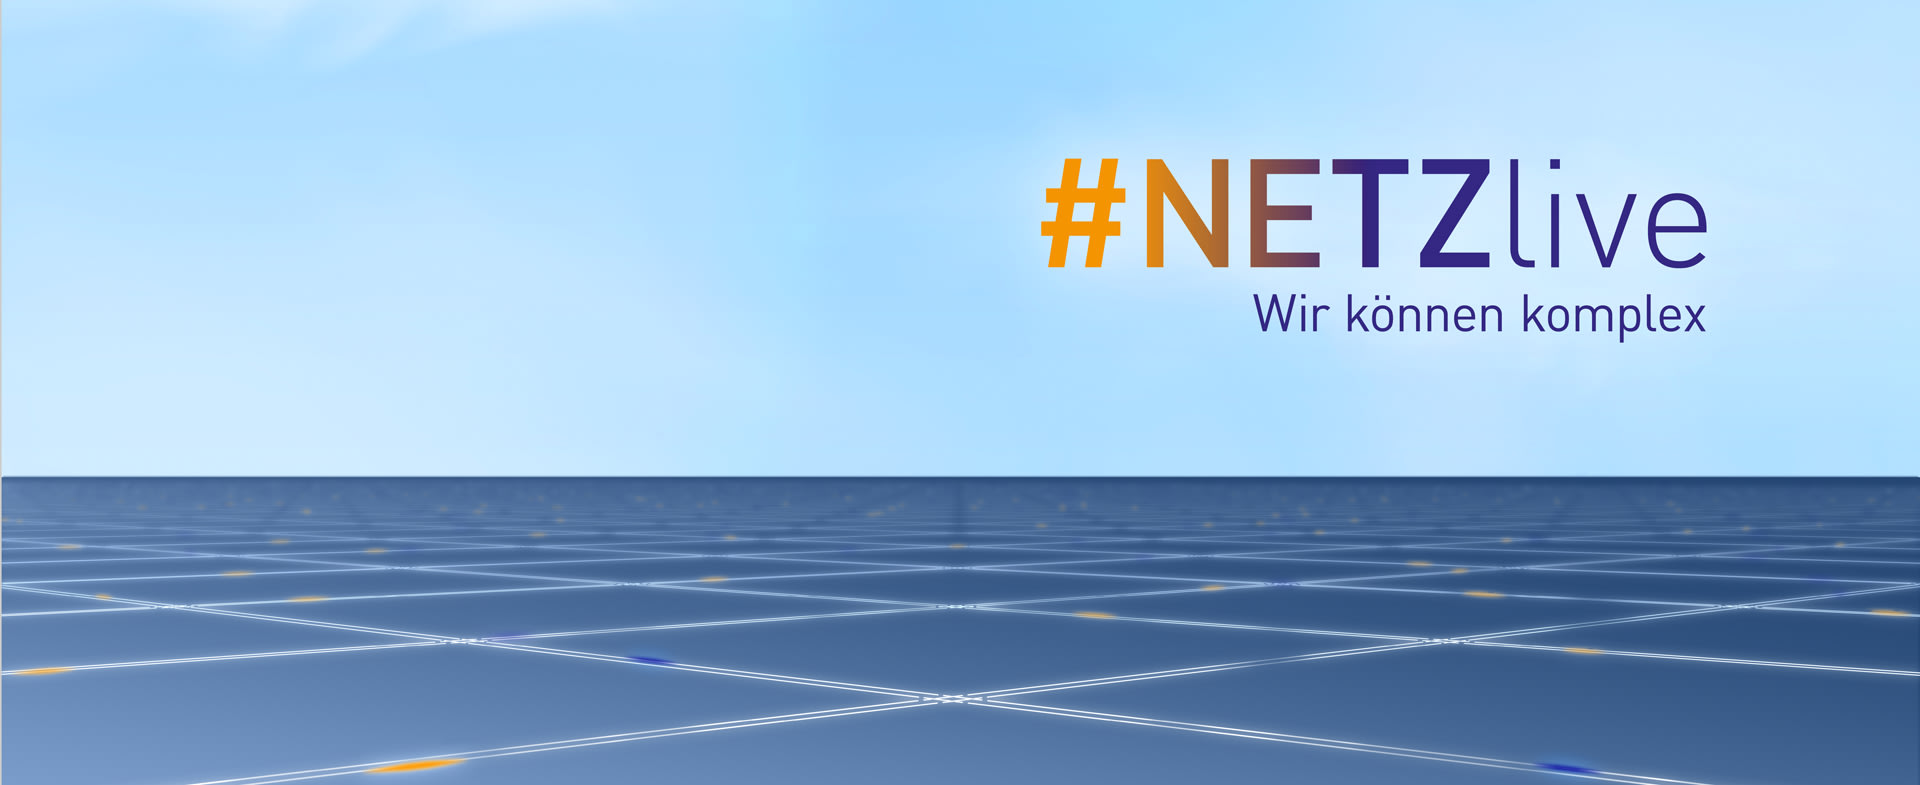 NETZlive - Netze BW GmbH